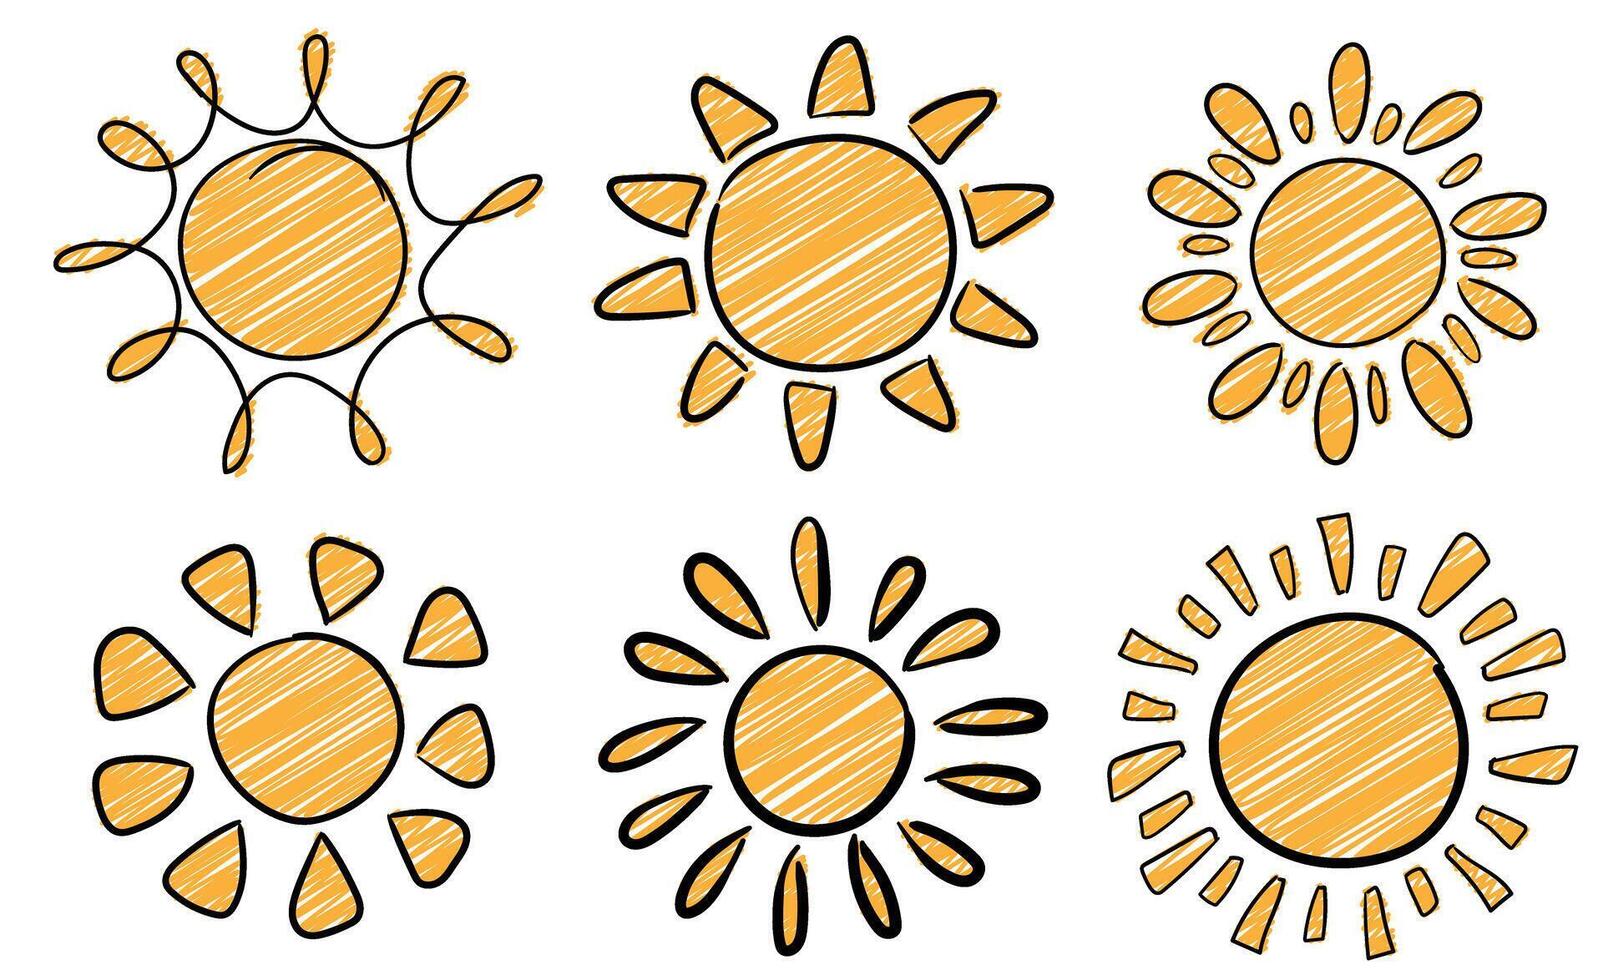 Cute doodle sun collection. Cartoon design elements. vector